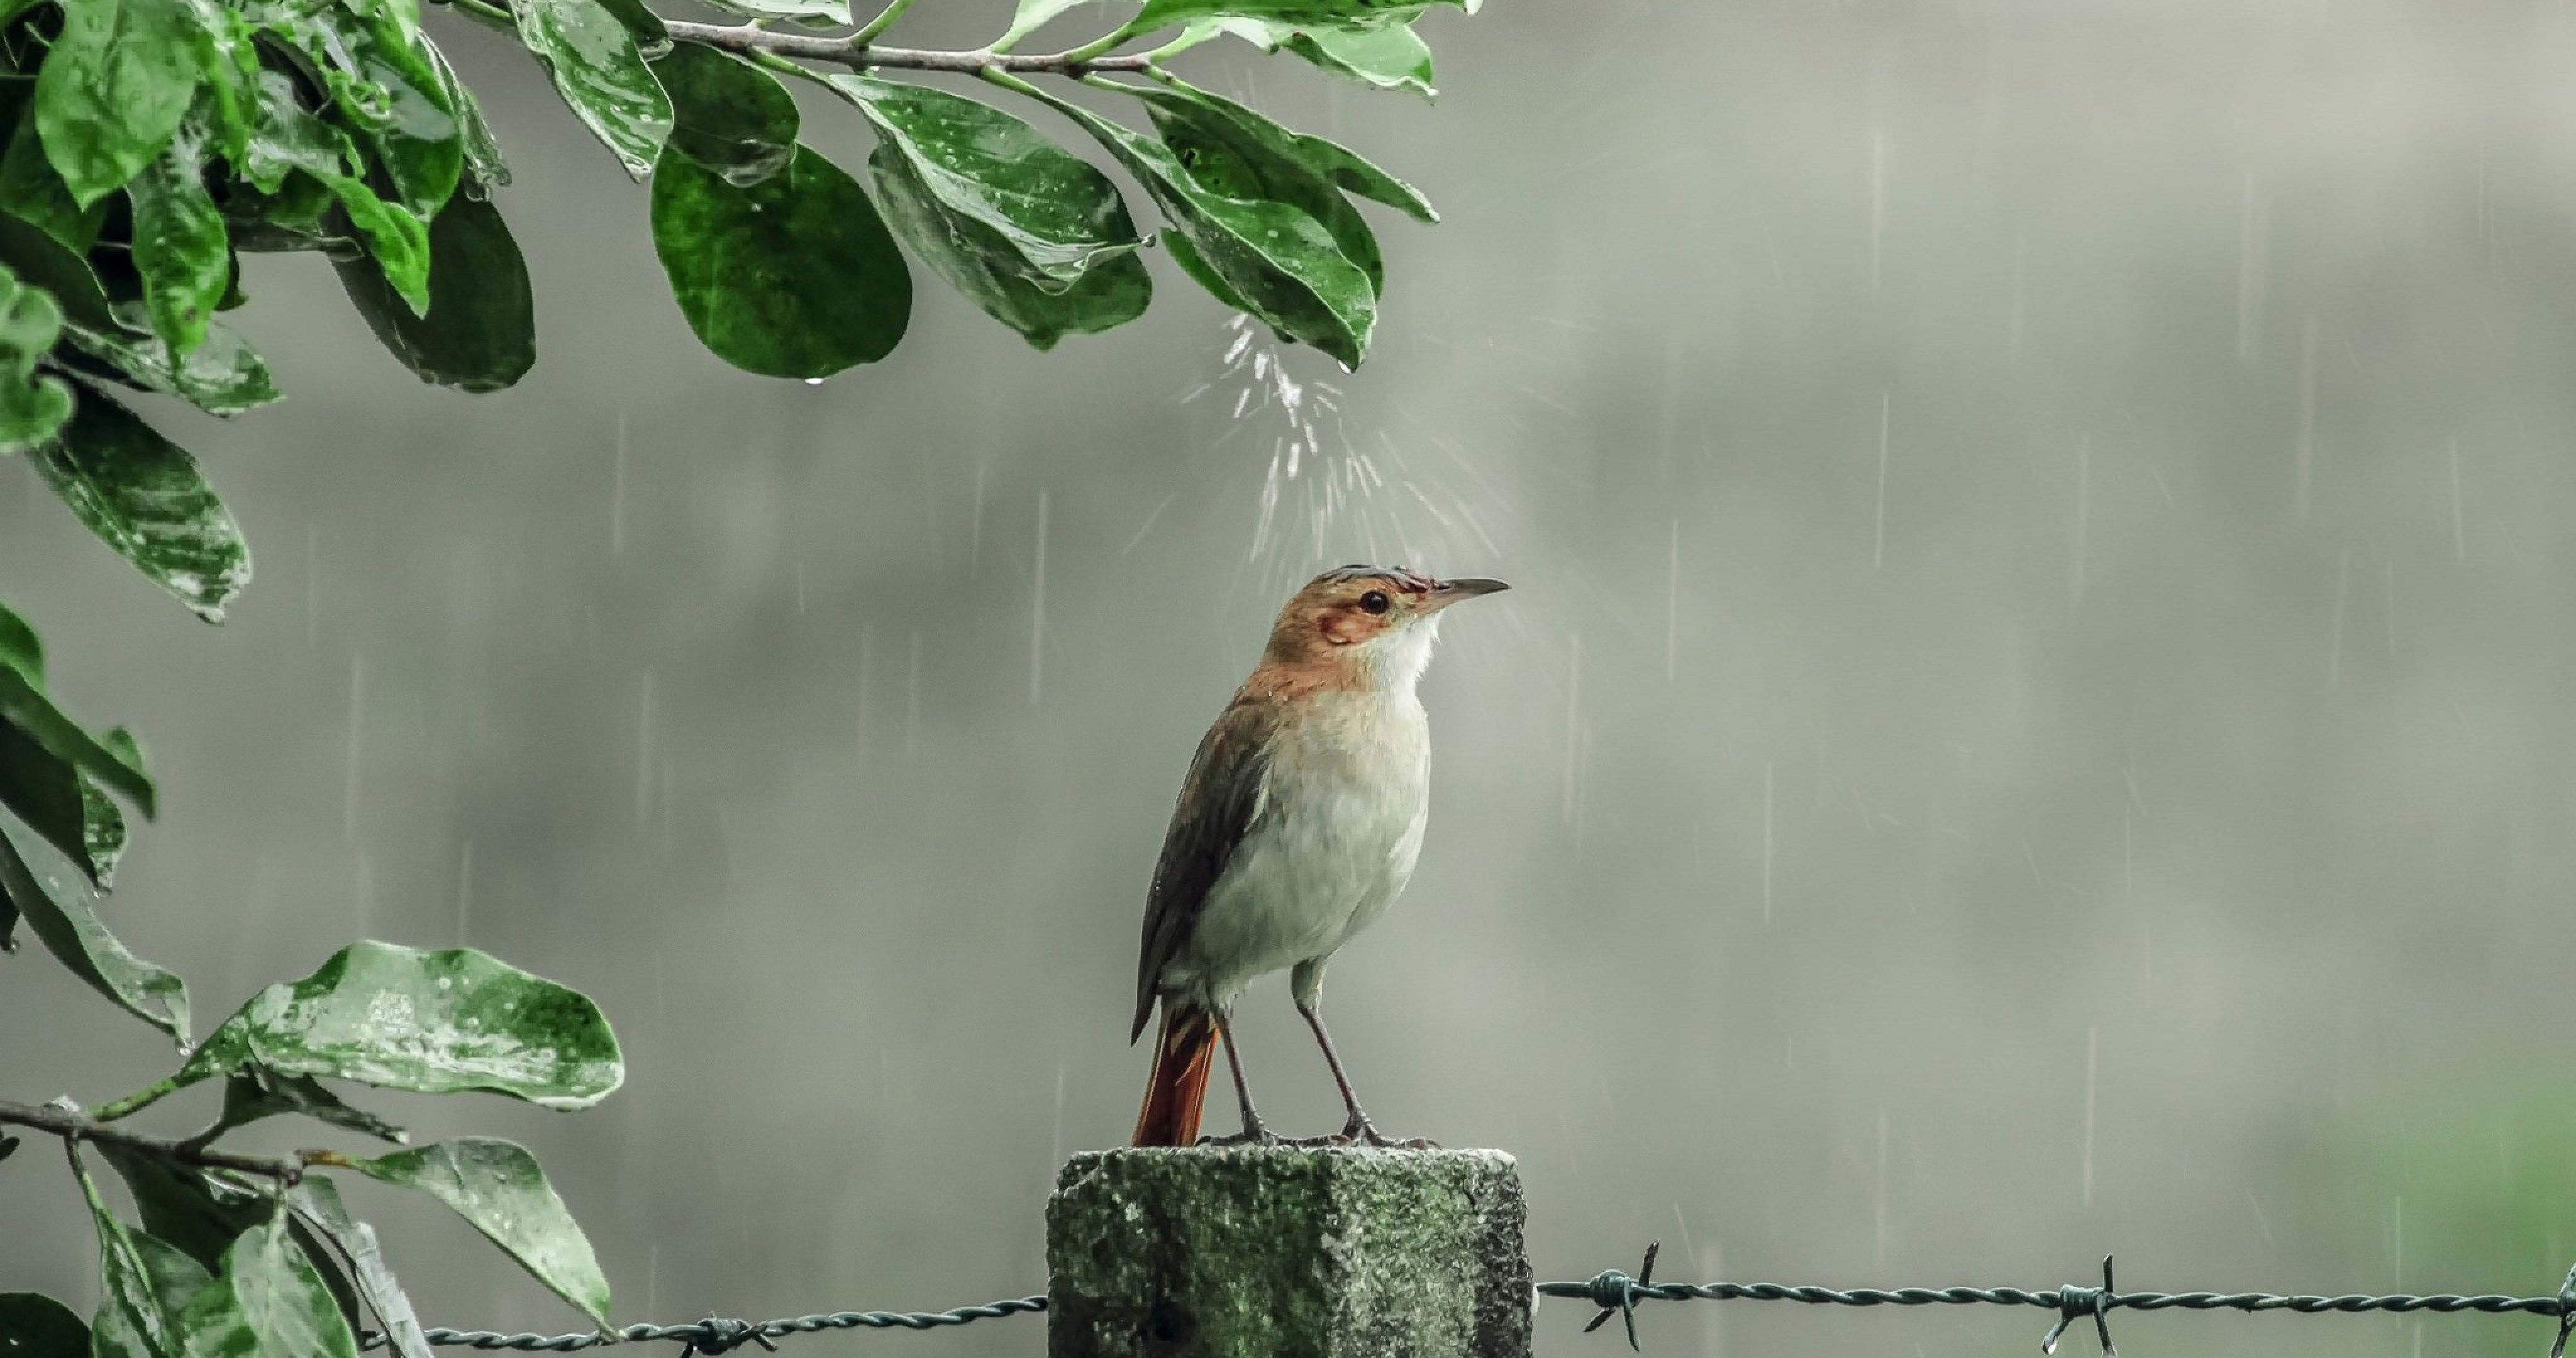 bird on rain 4k ultra HD wallpaper. Rain wallpaper, Wallpaper picture, Beautiful birds